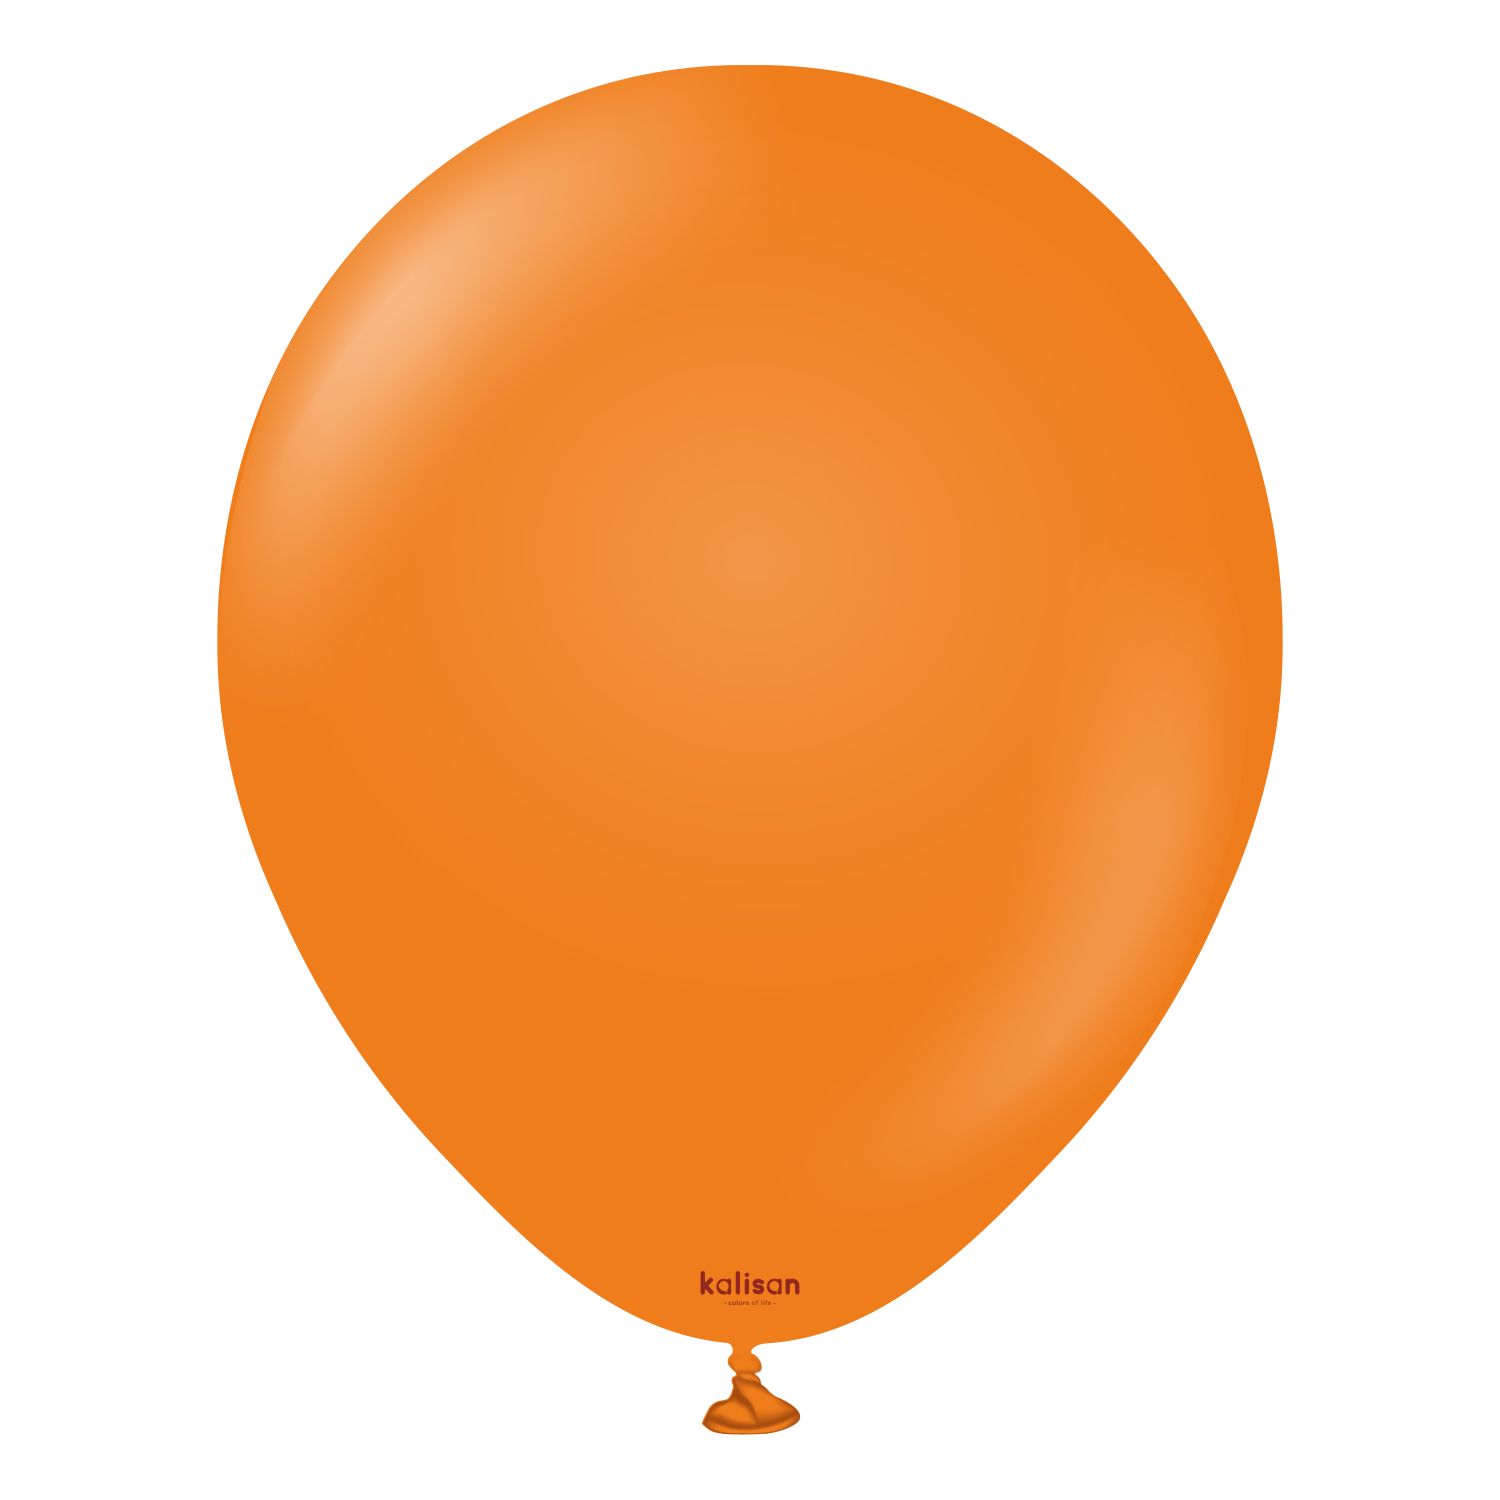 Ballon orange nacré x50